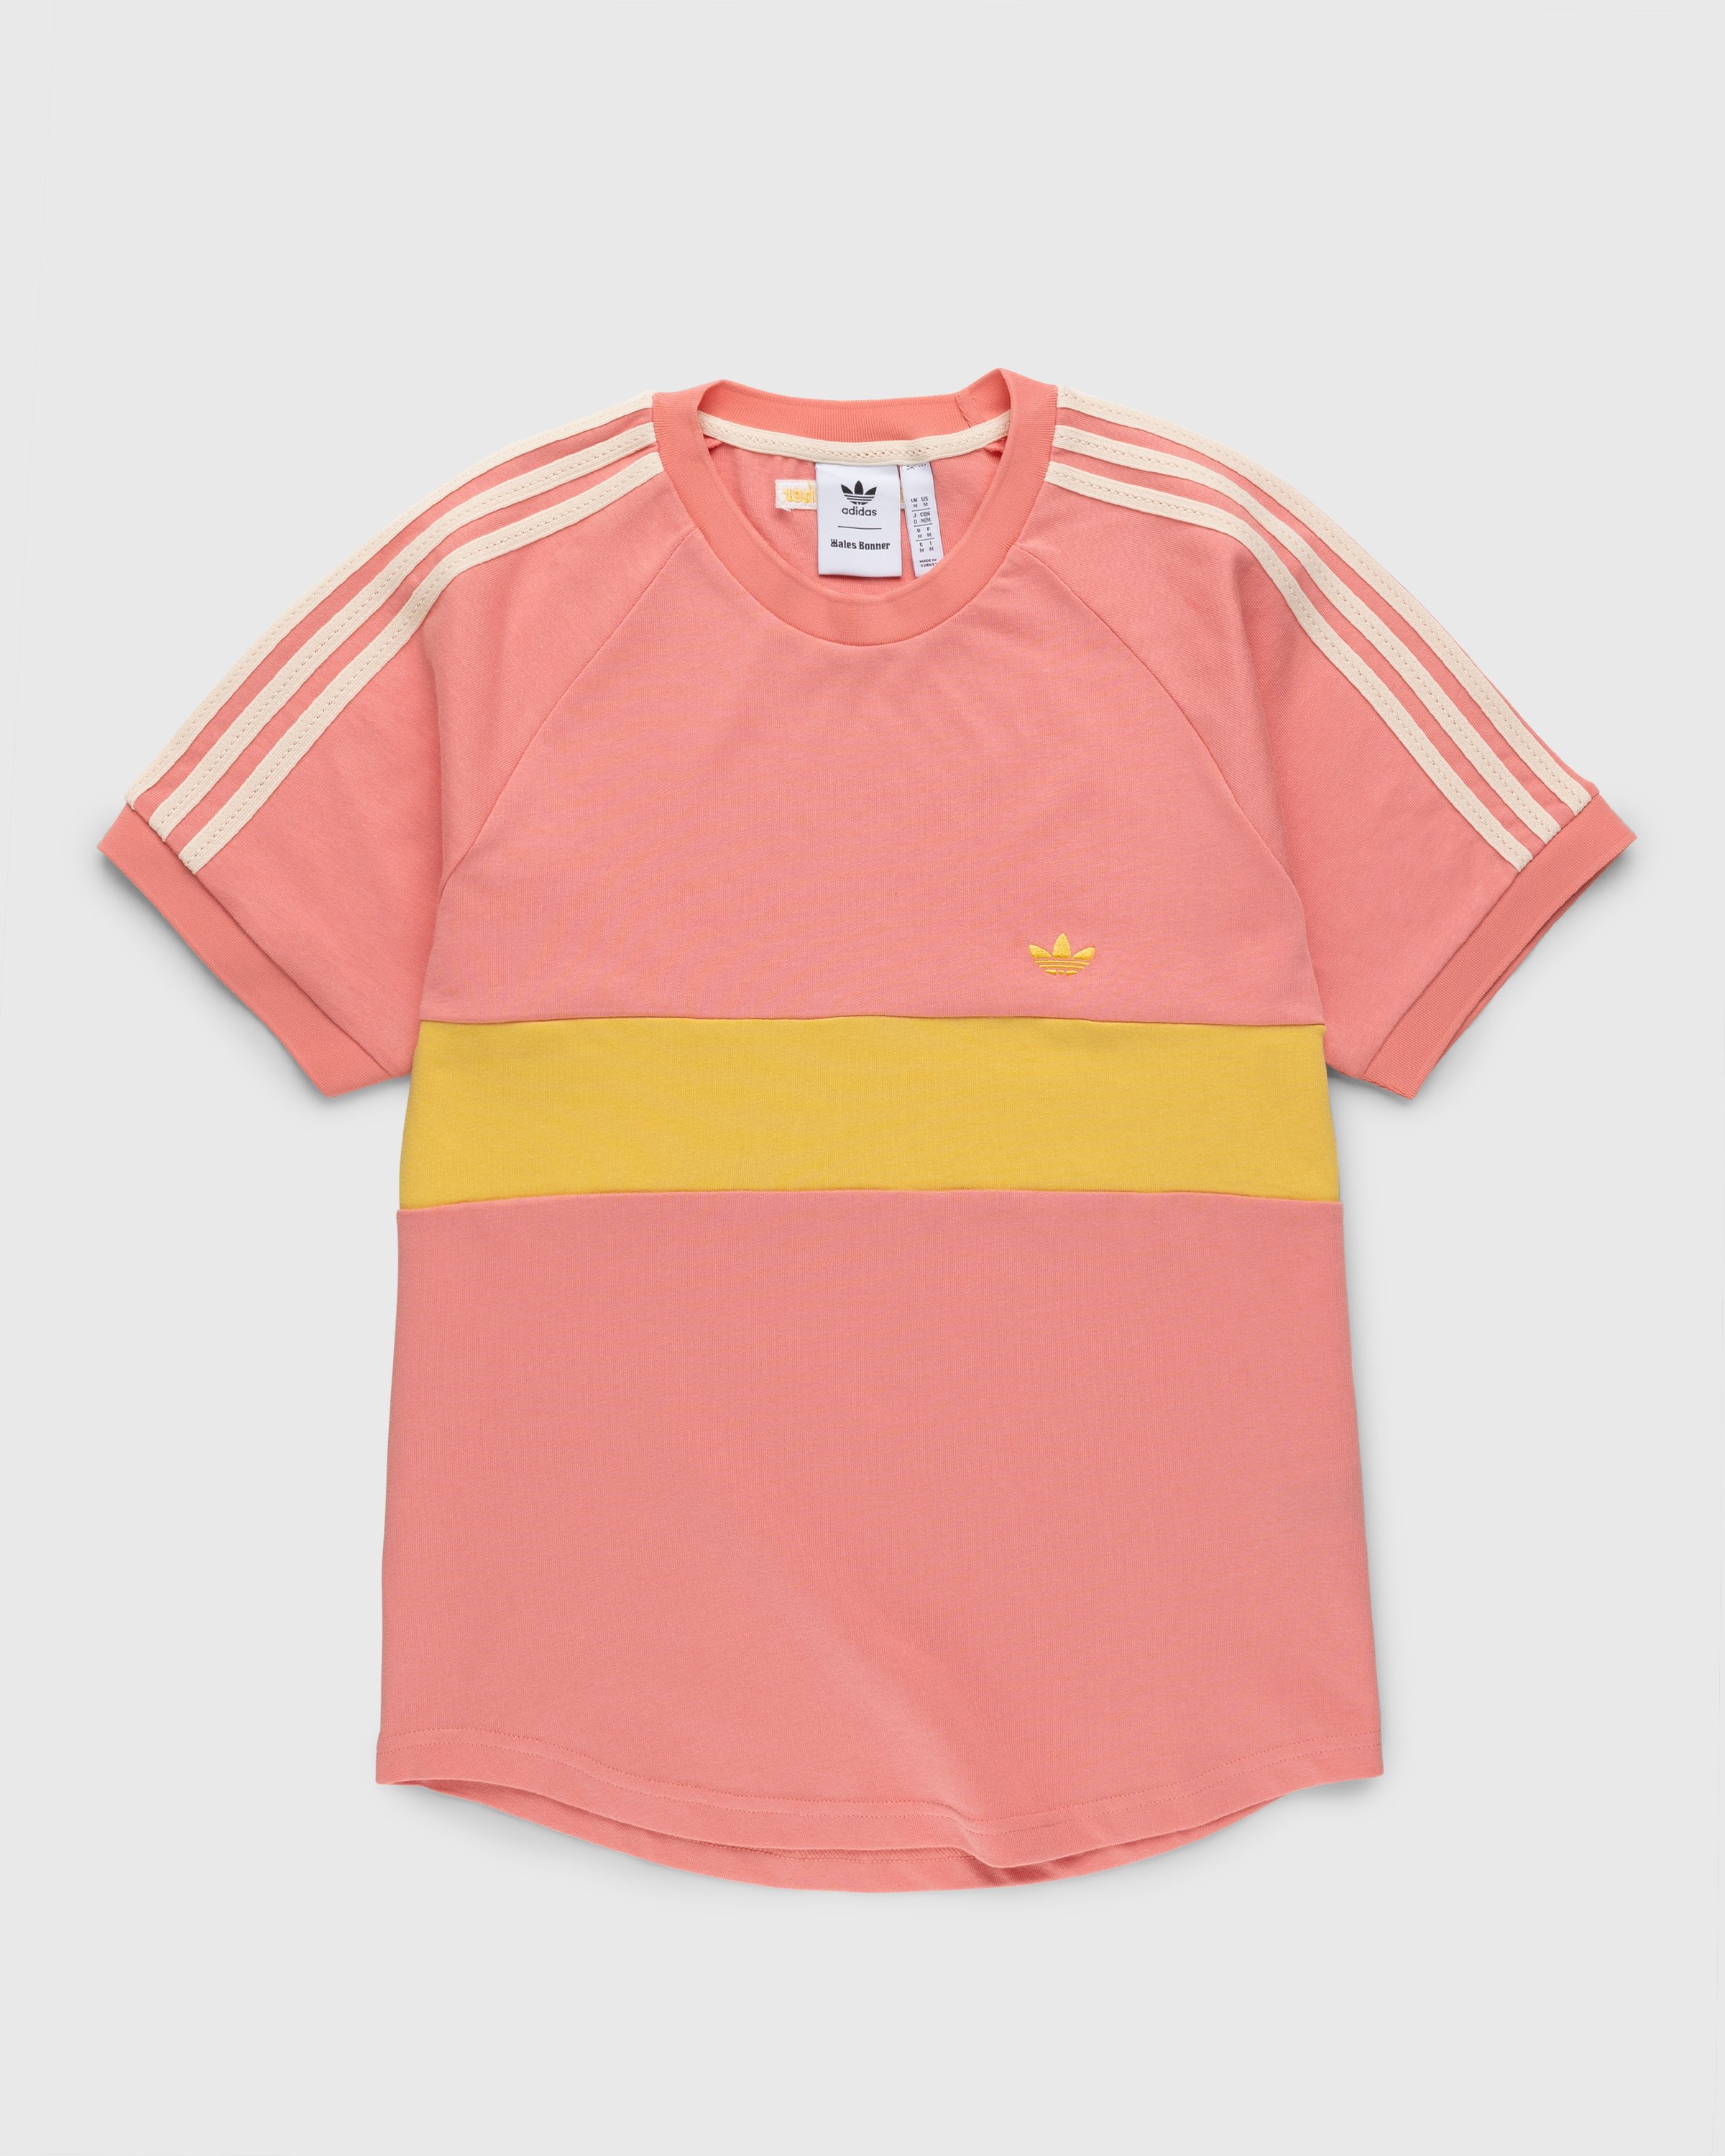 Adidas x Wales Bonner - WB Tee Tactile Rose - Clothing - Pink - Image 1